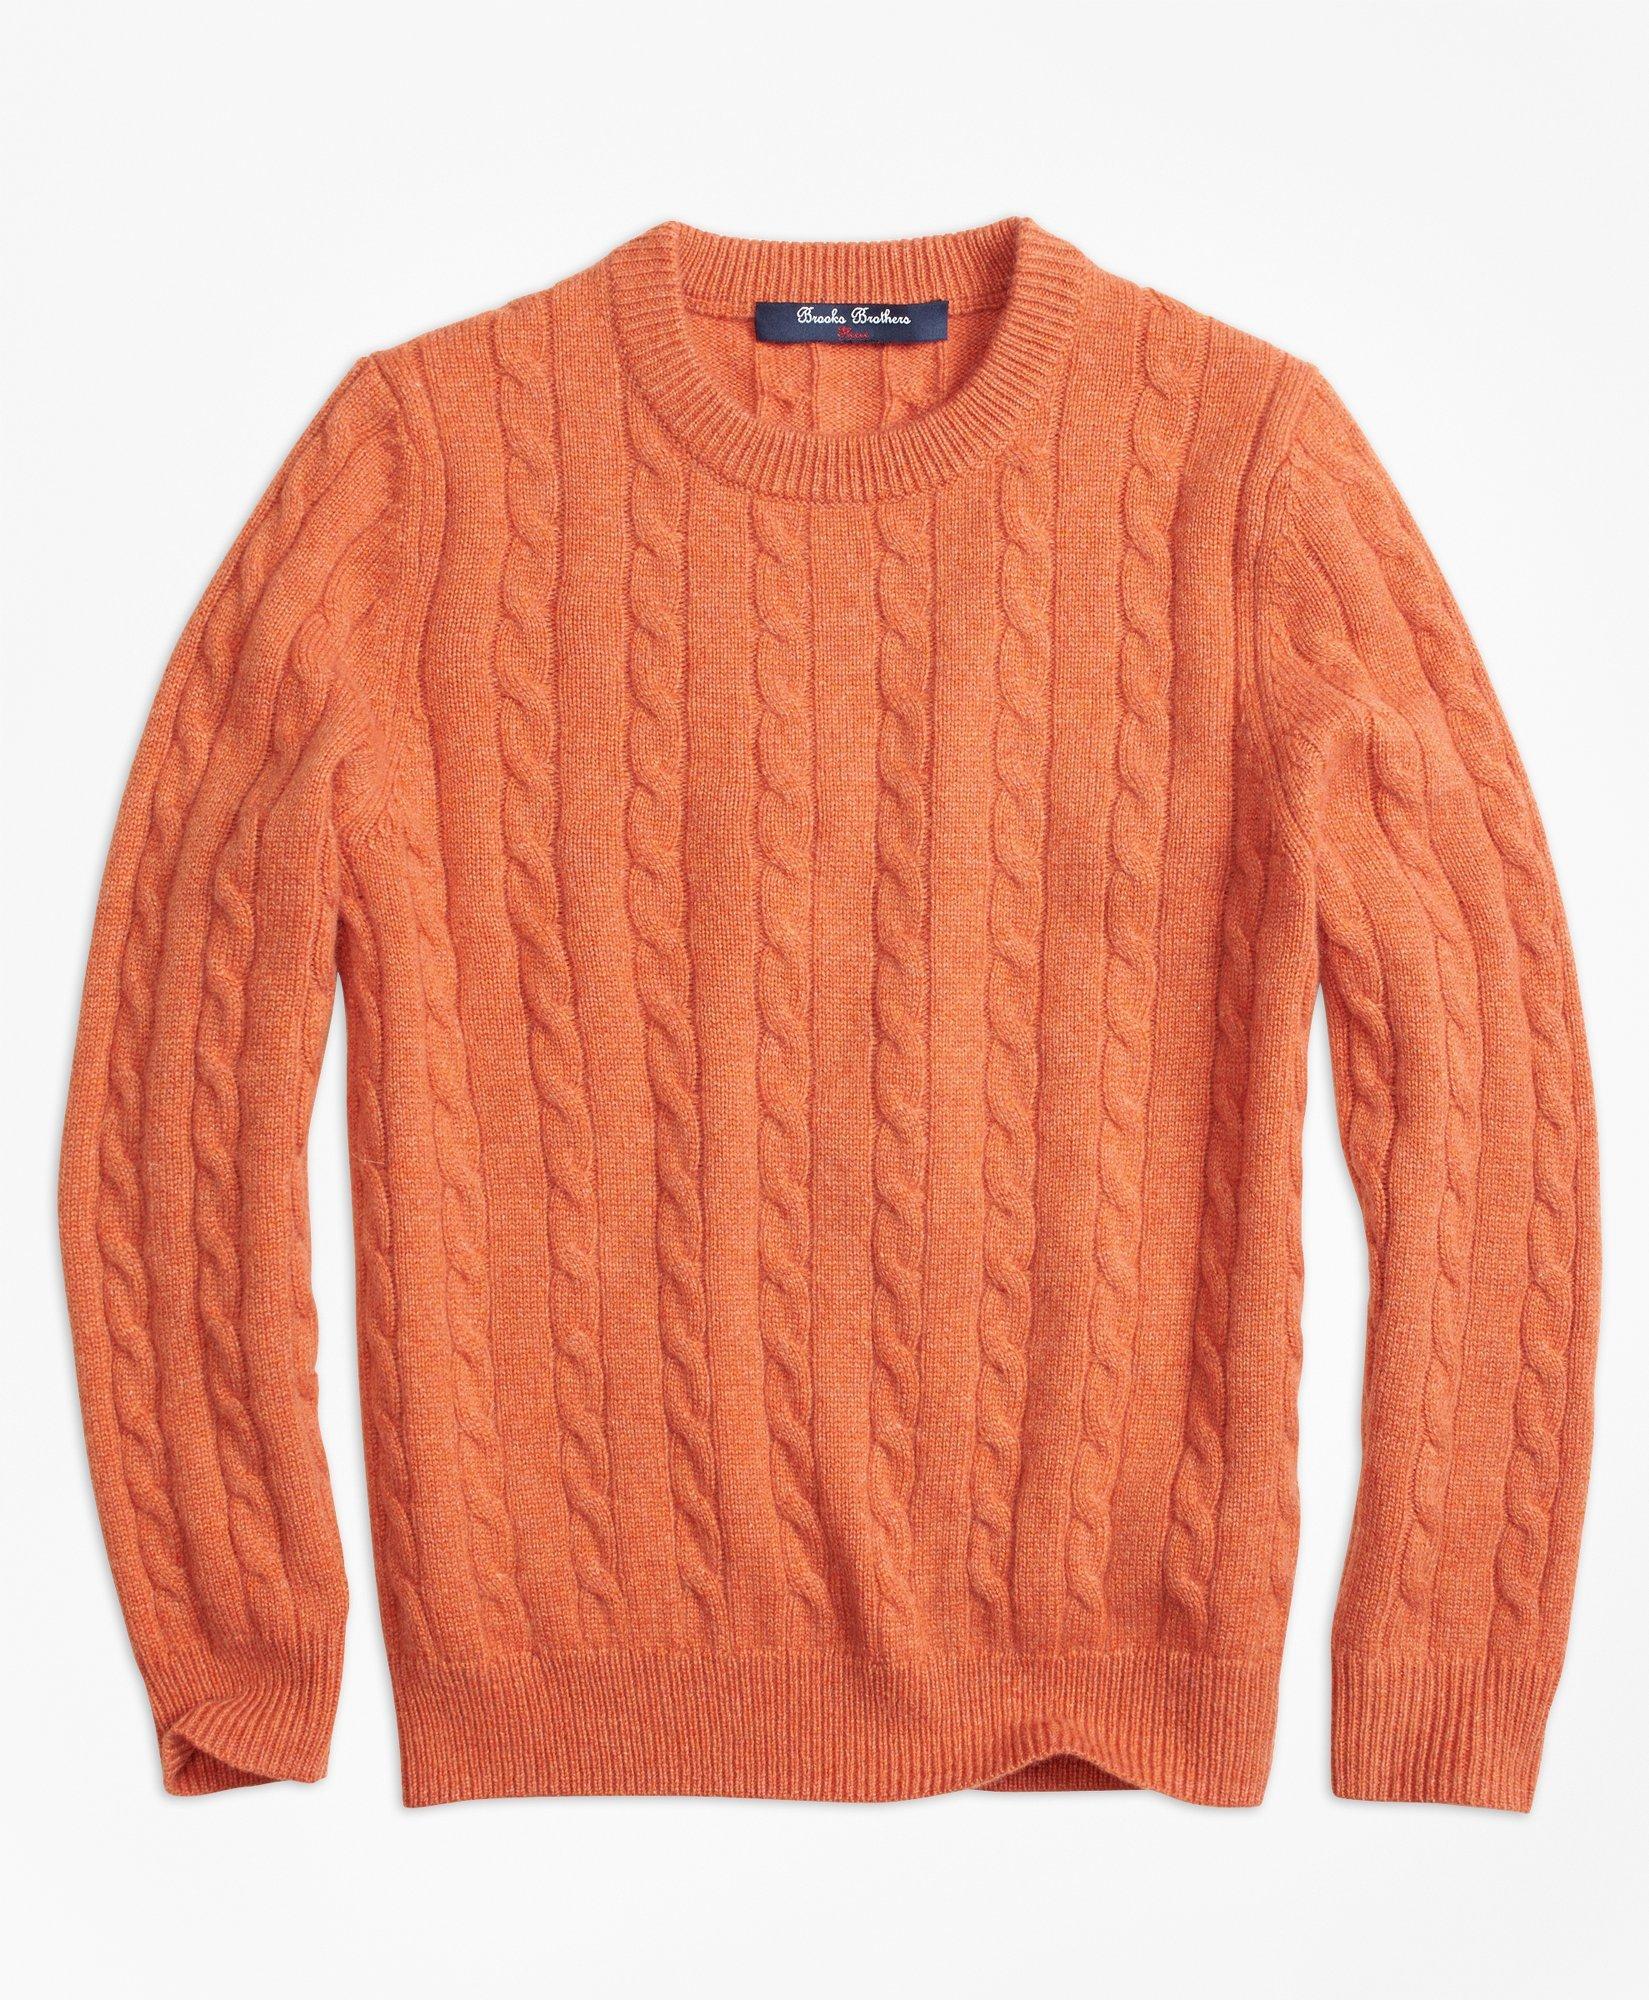 Boys Cashmere Cable Crewneck Sweater, image 1